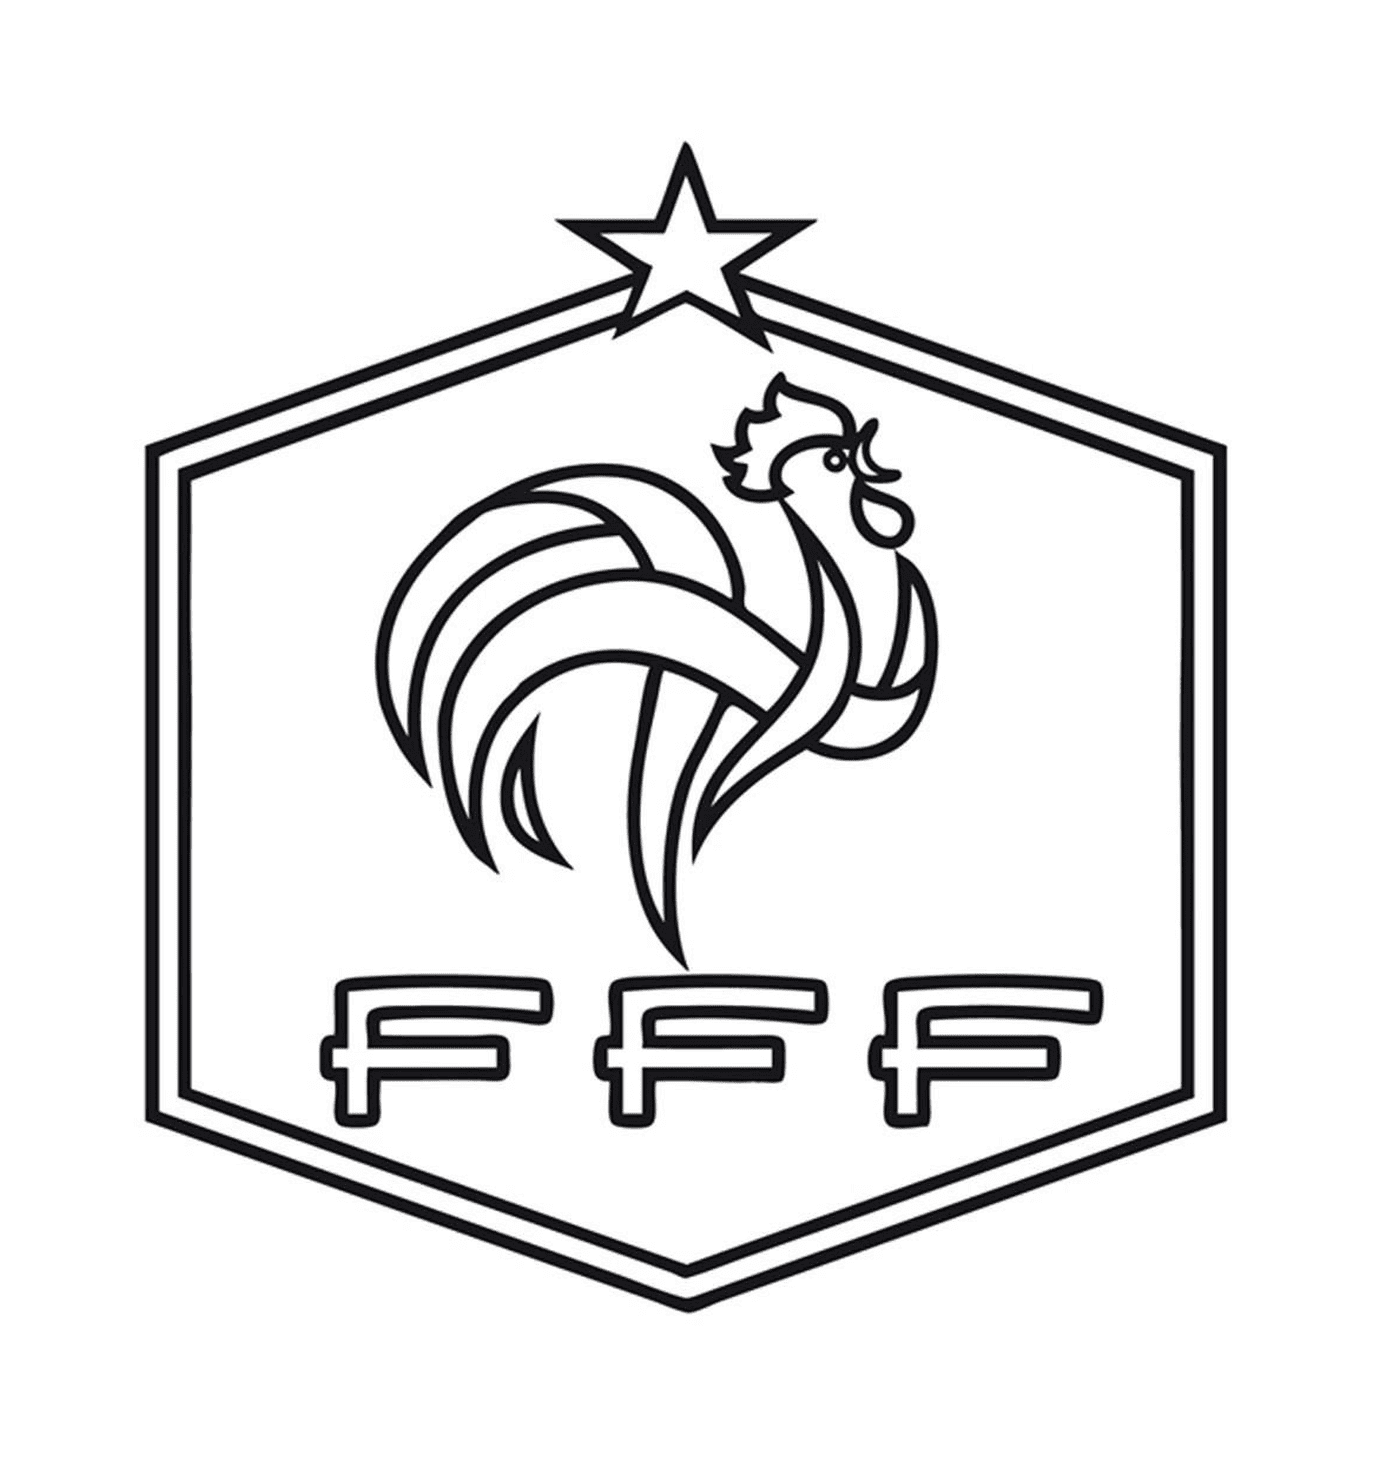 federation francaise de foot FFF